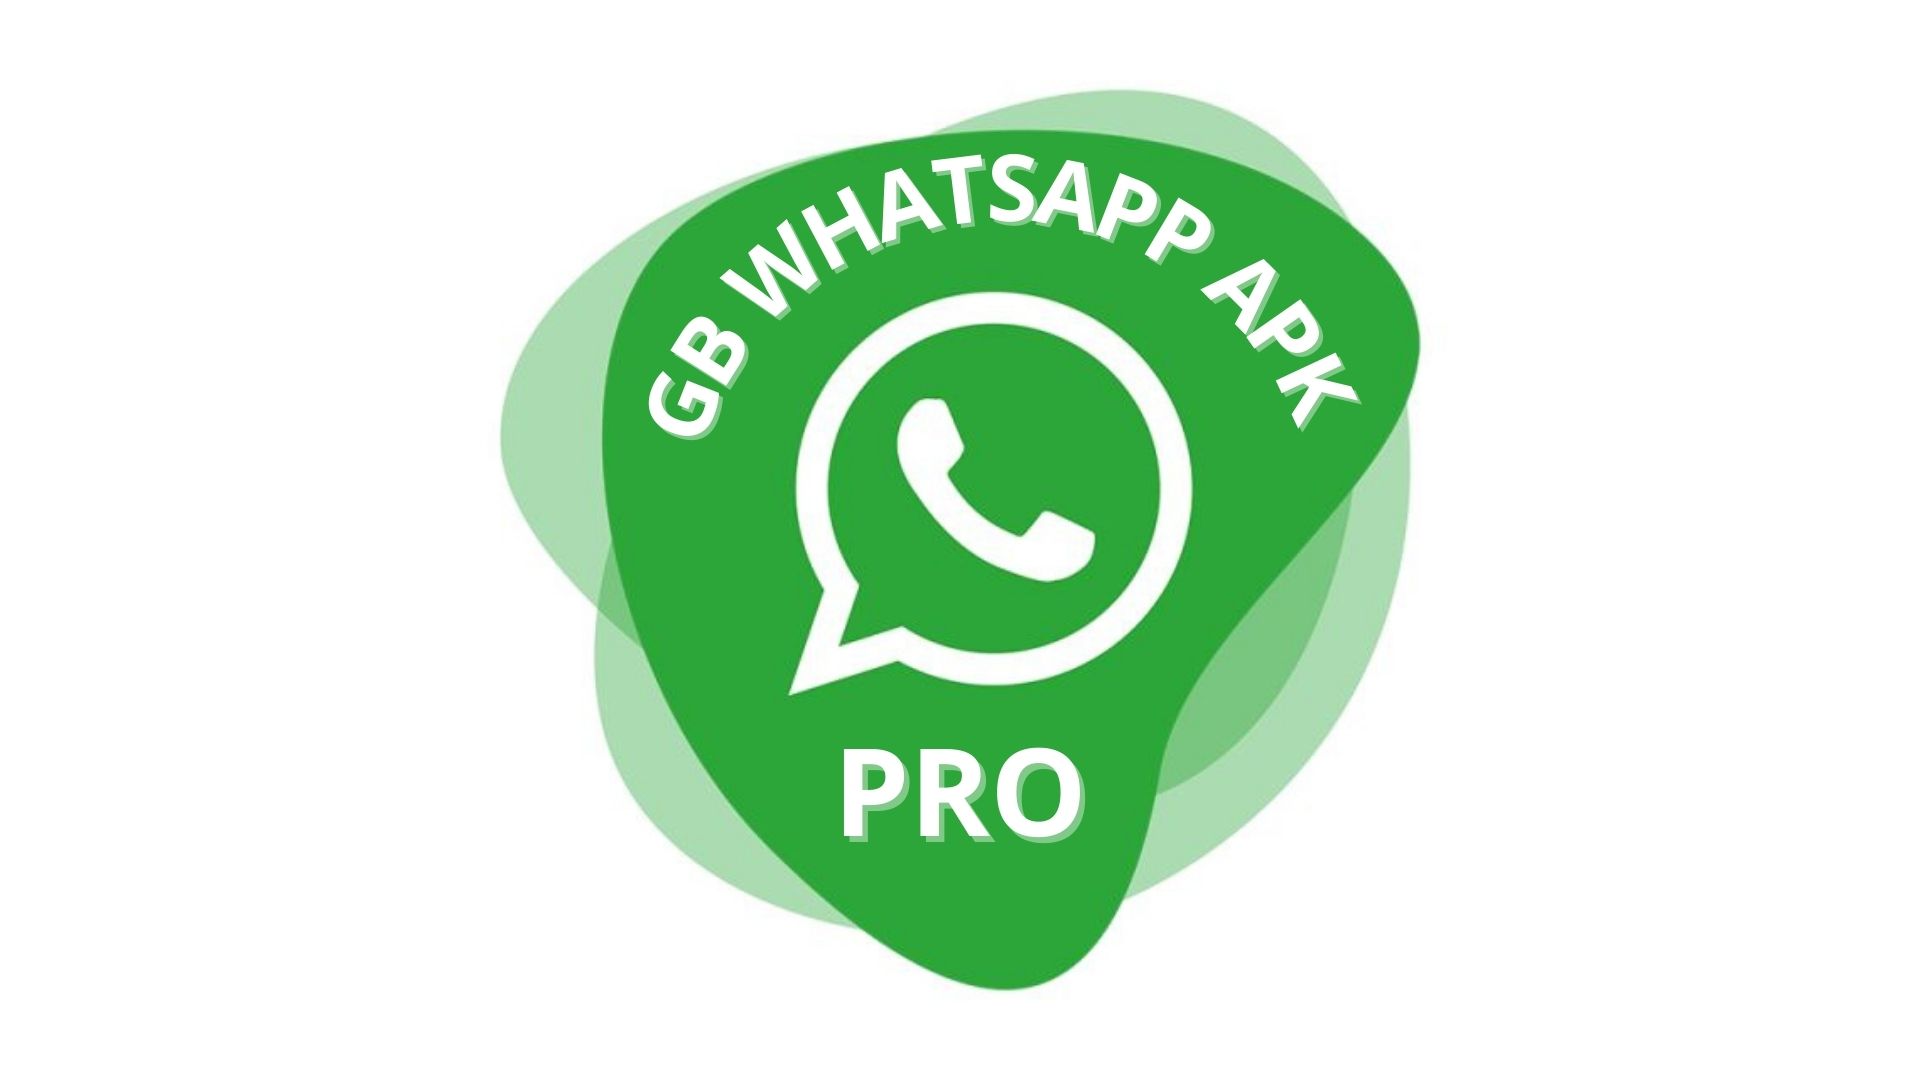 Kepo Dengan Aplikasi WhatsApp Mod Apk Paling Aman? Cari Tahu Jawabannya Disini, Punya Fitur Anti Virus